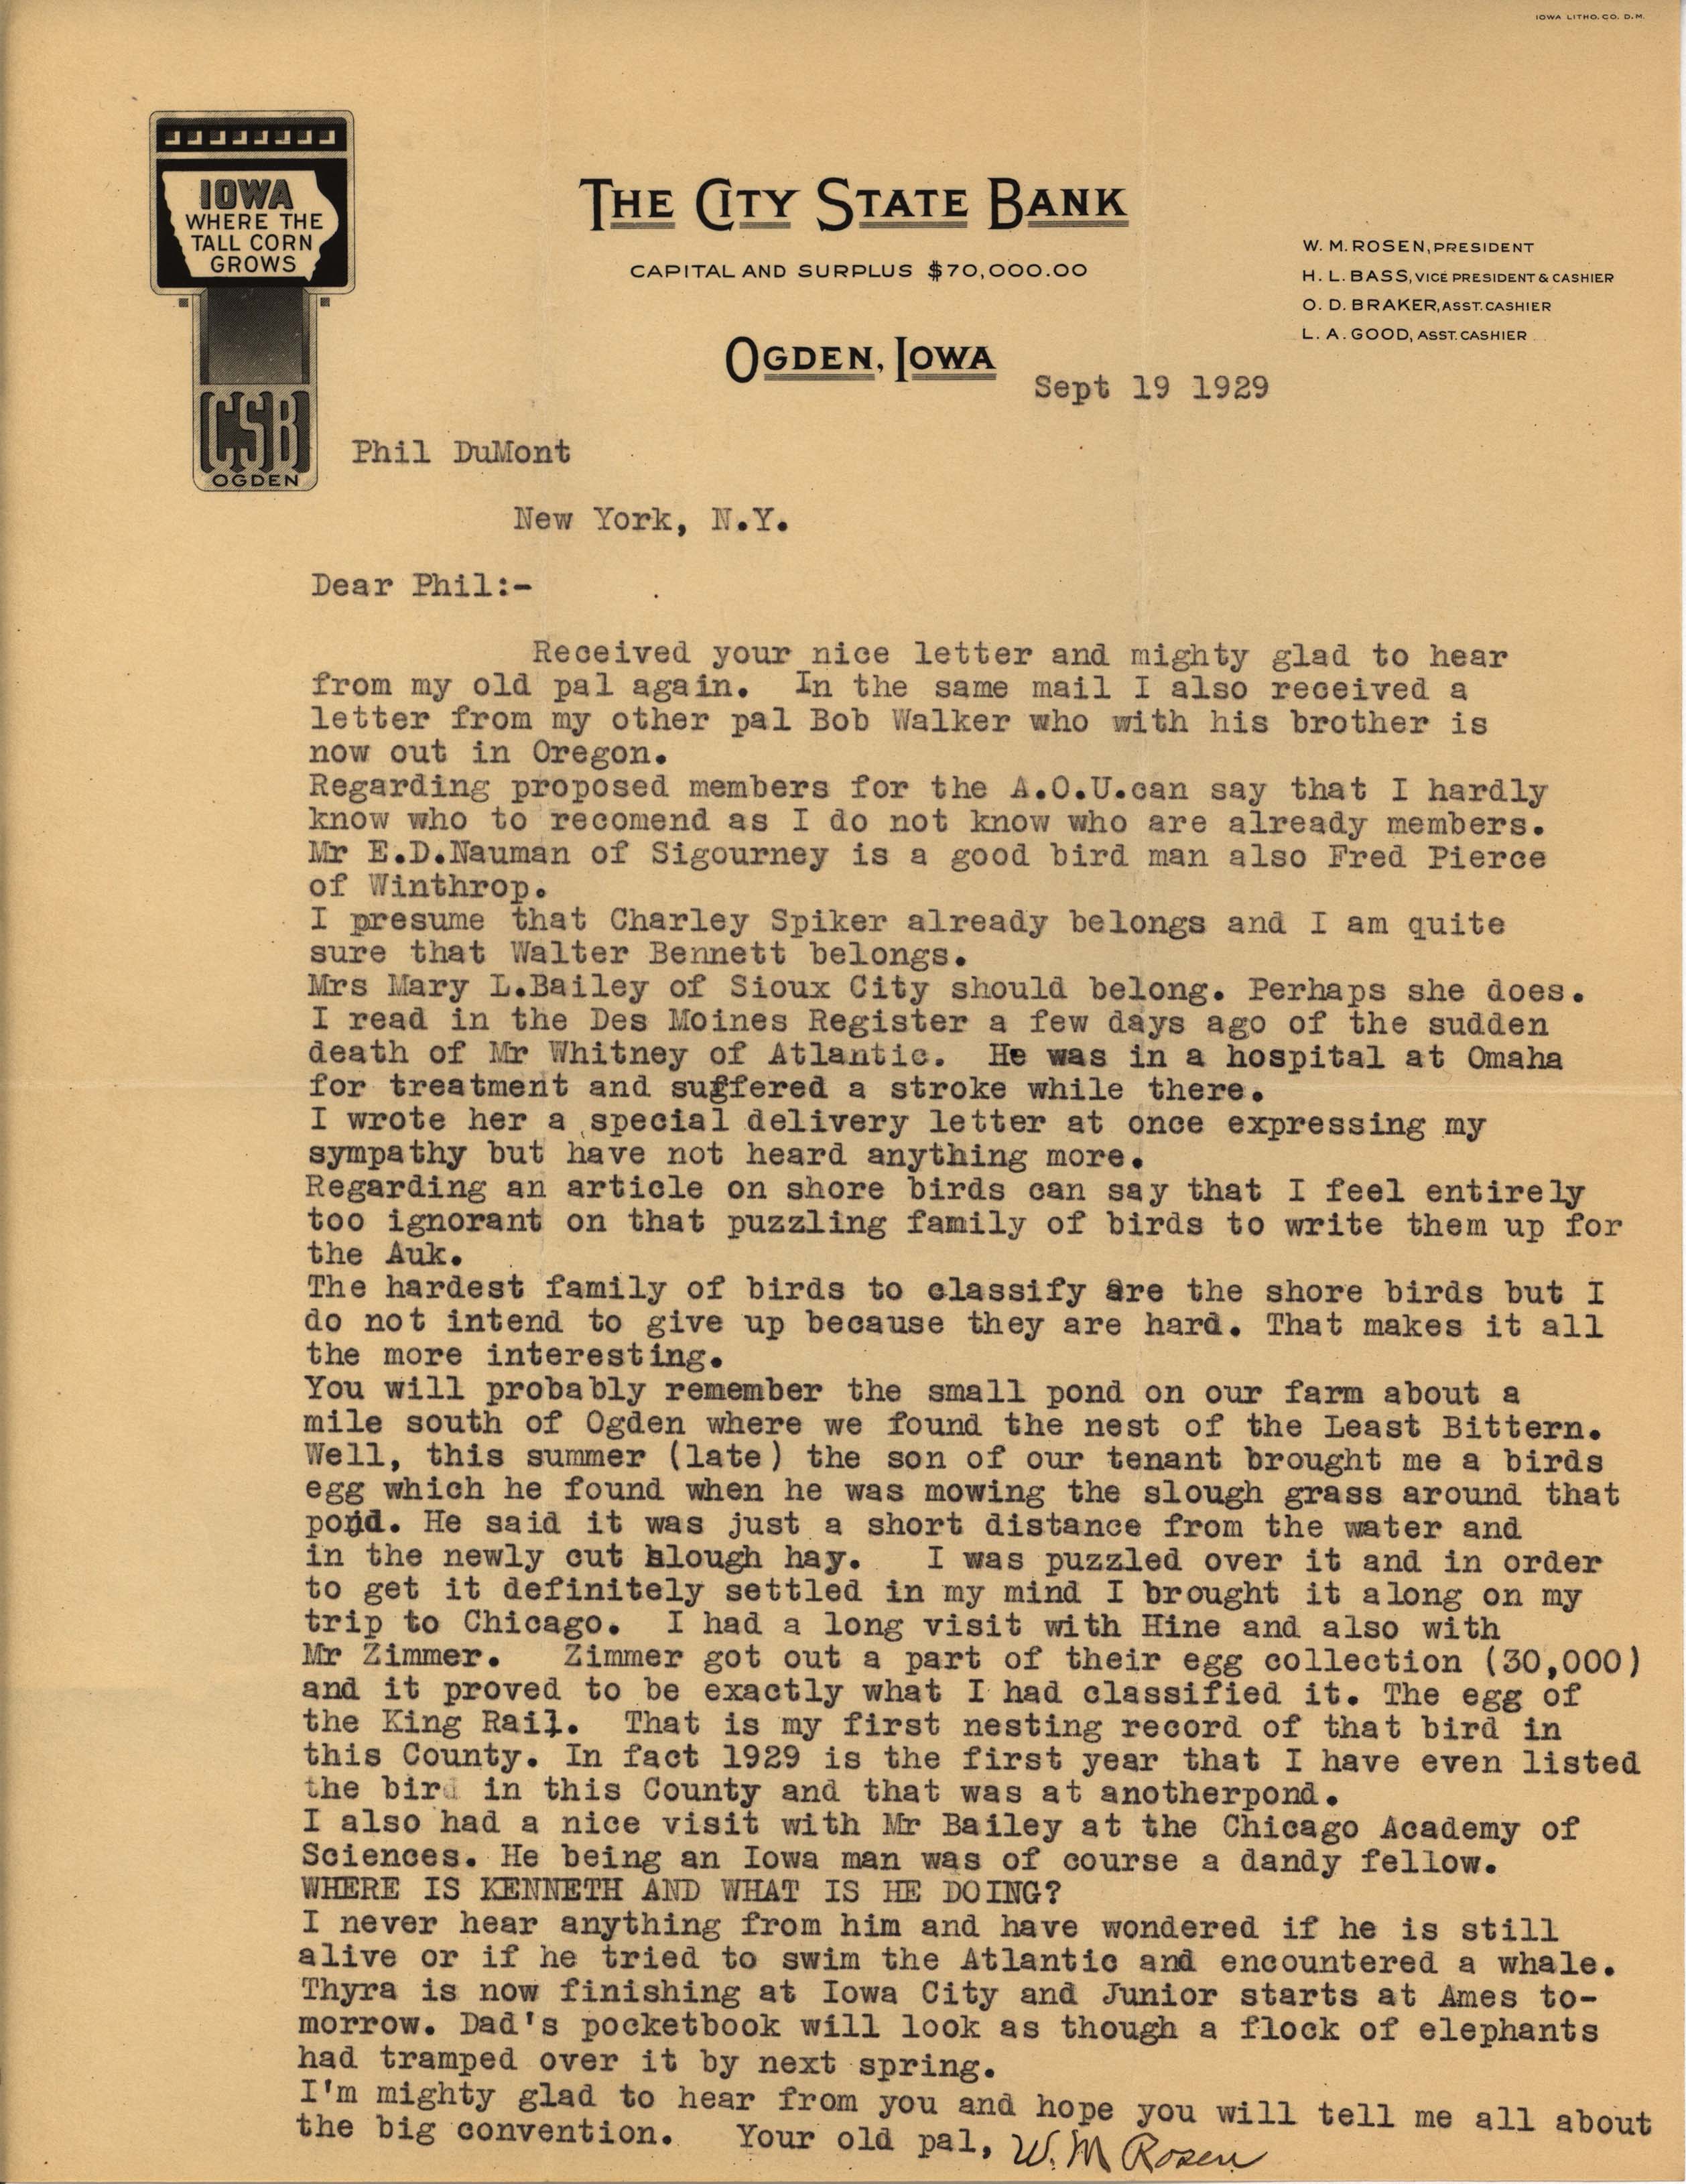 Walter Rosene letter to Philip DuMont regarding proposed members for the American Ornithologists' Union, September 19, 1929